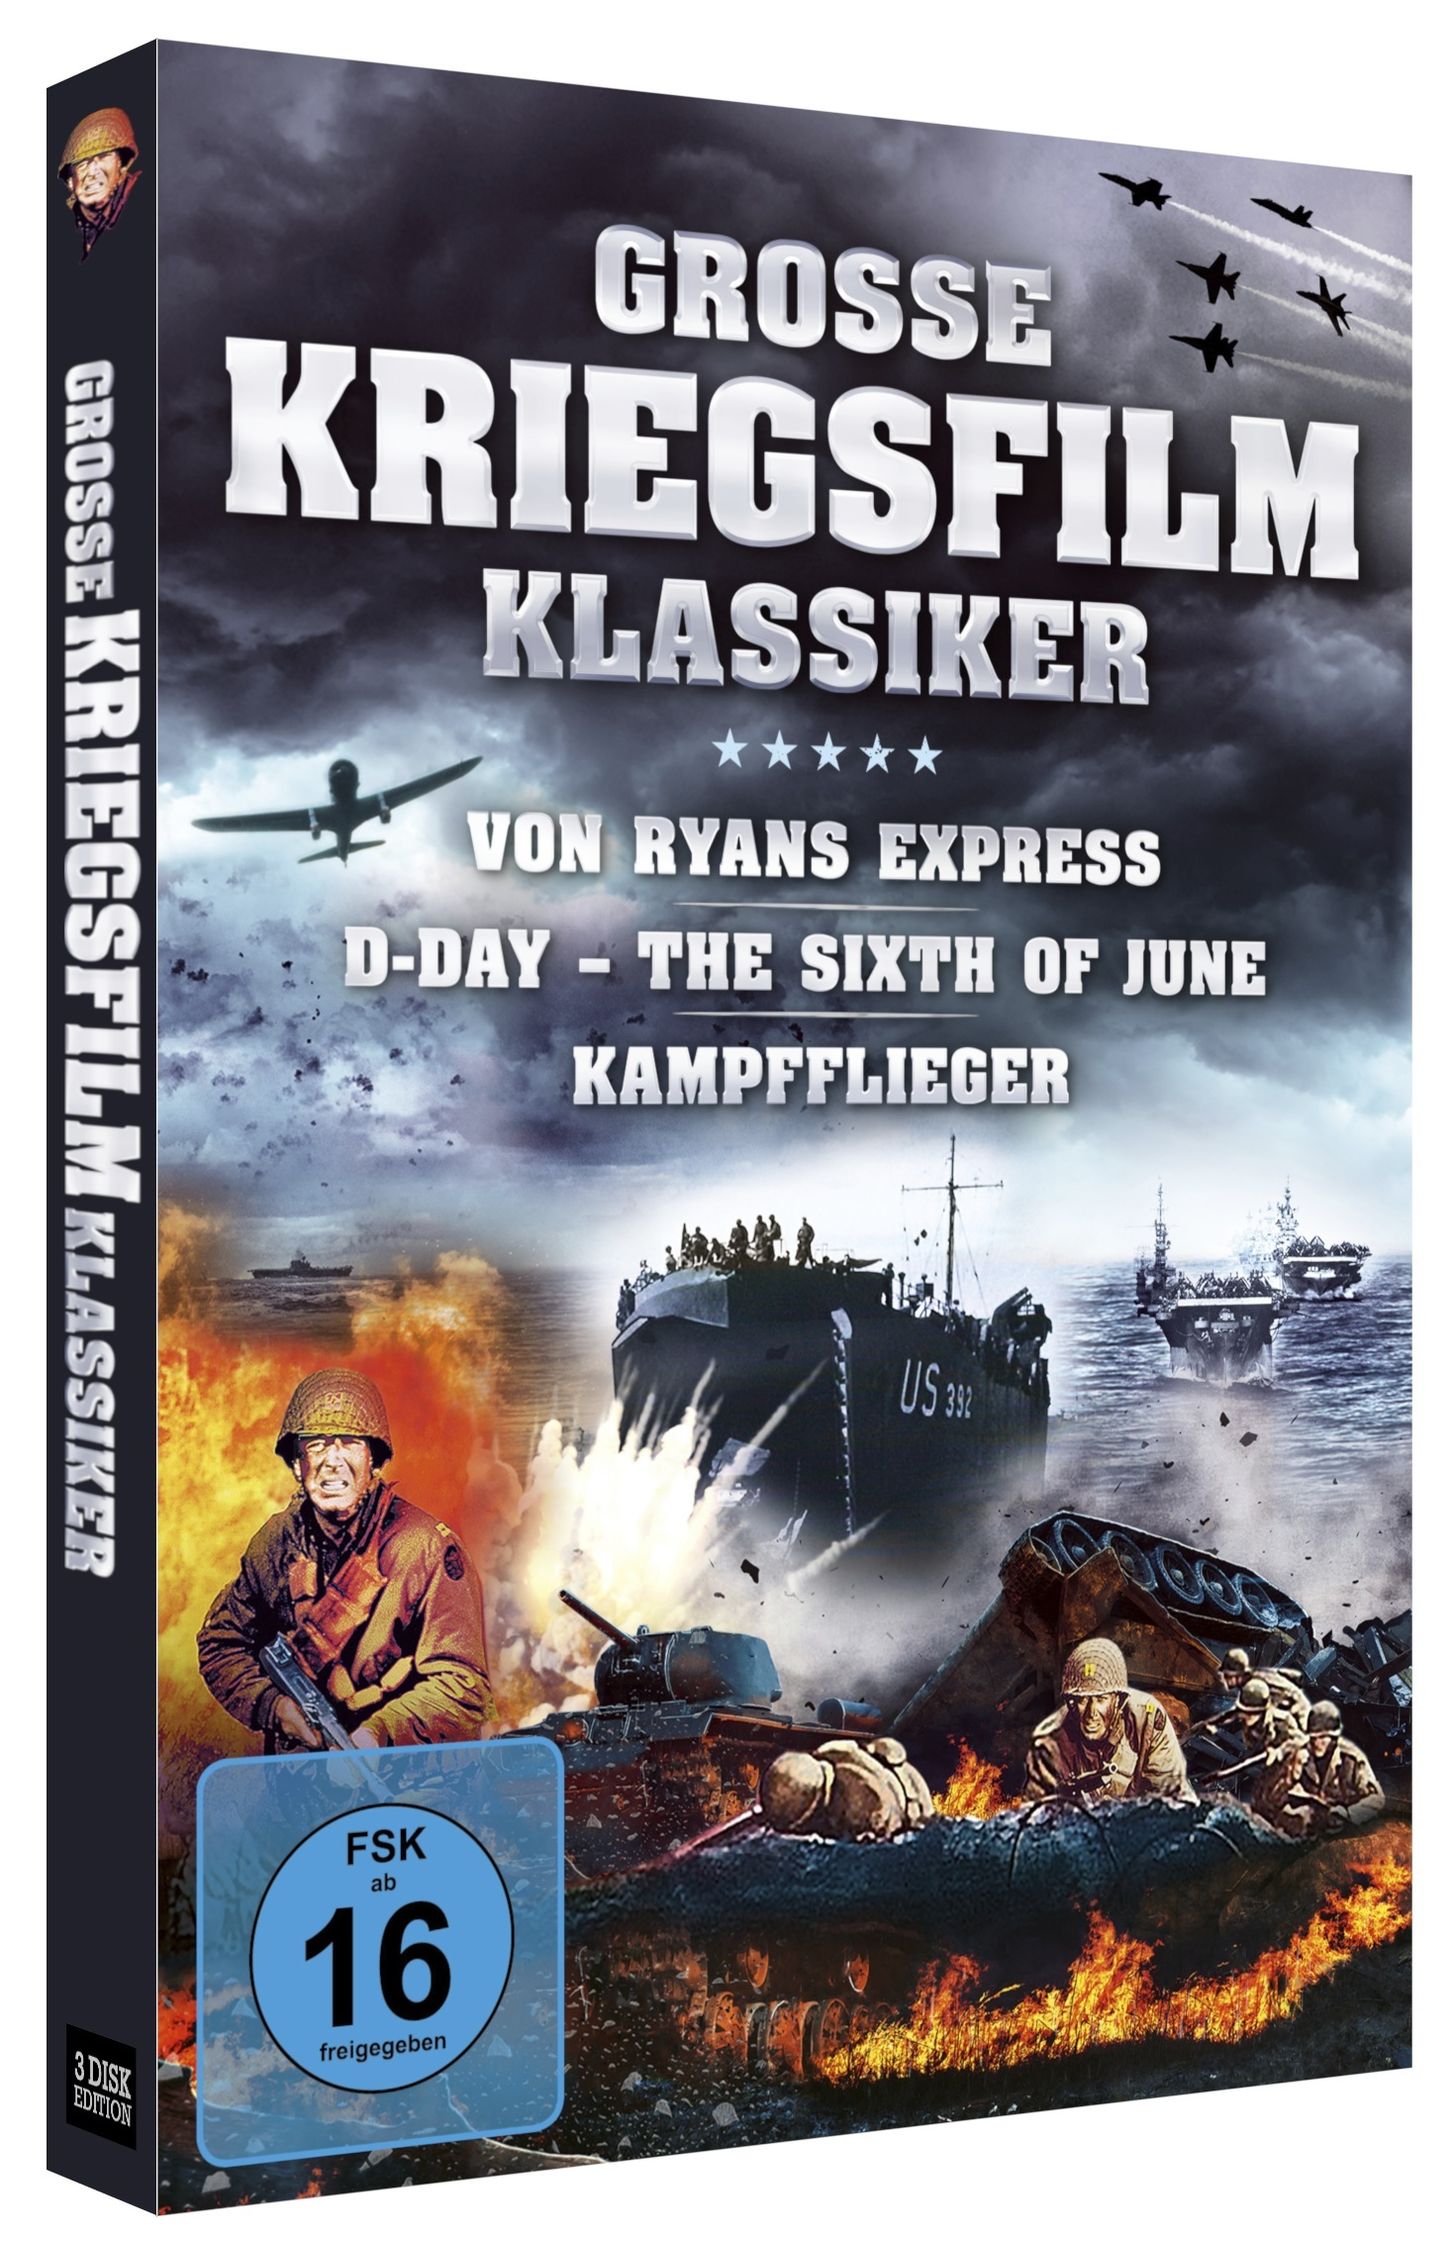 Grosse Kriegsfilm Klassiker Dvd Bei Weltbildde Bestellen 